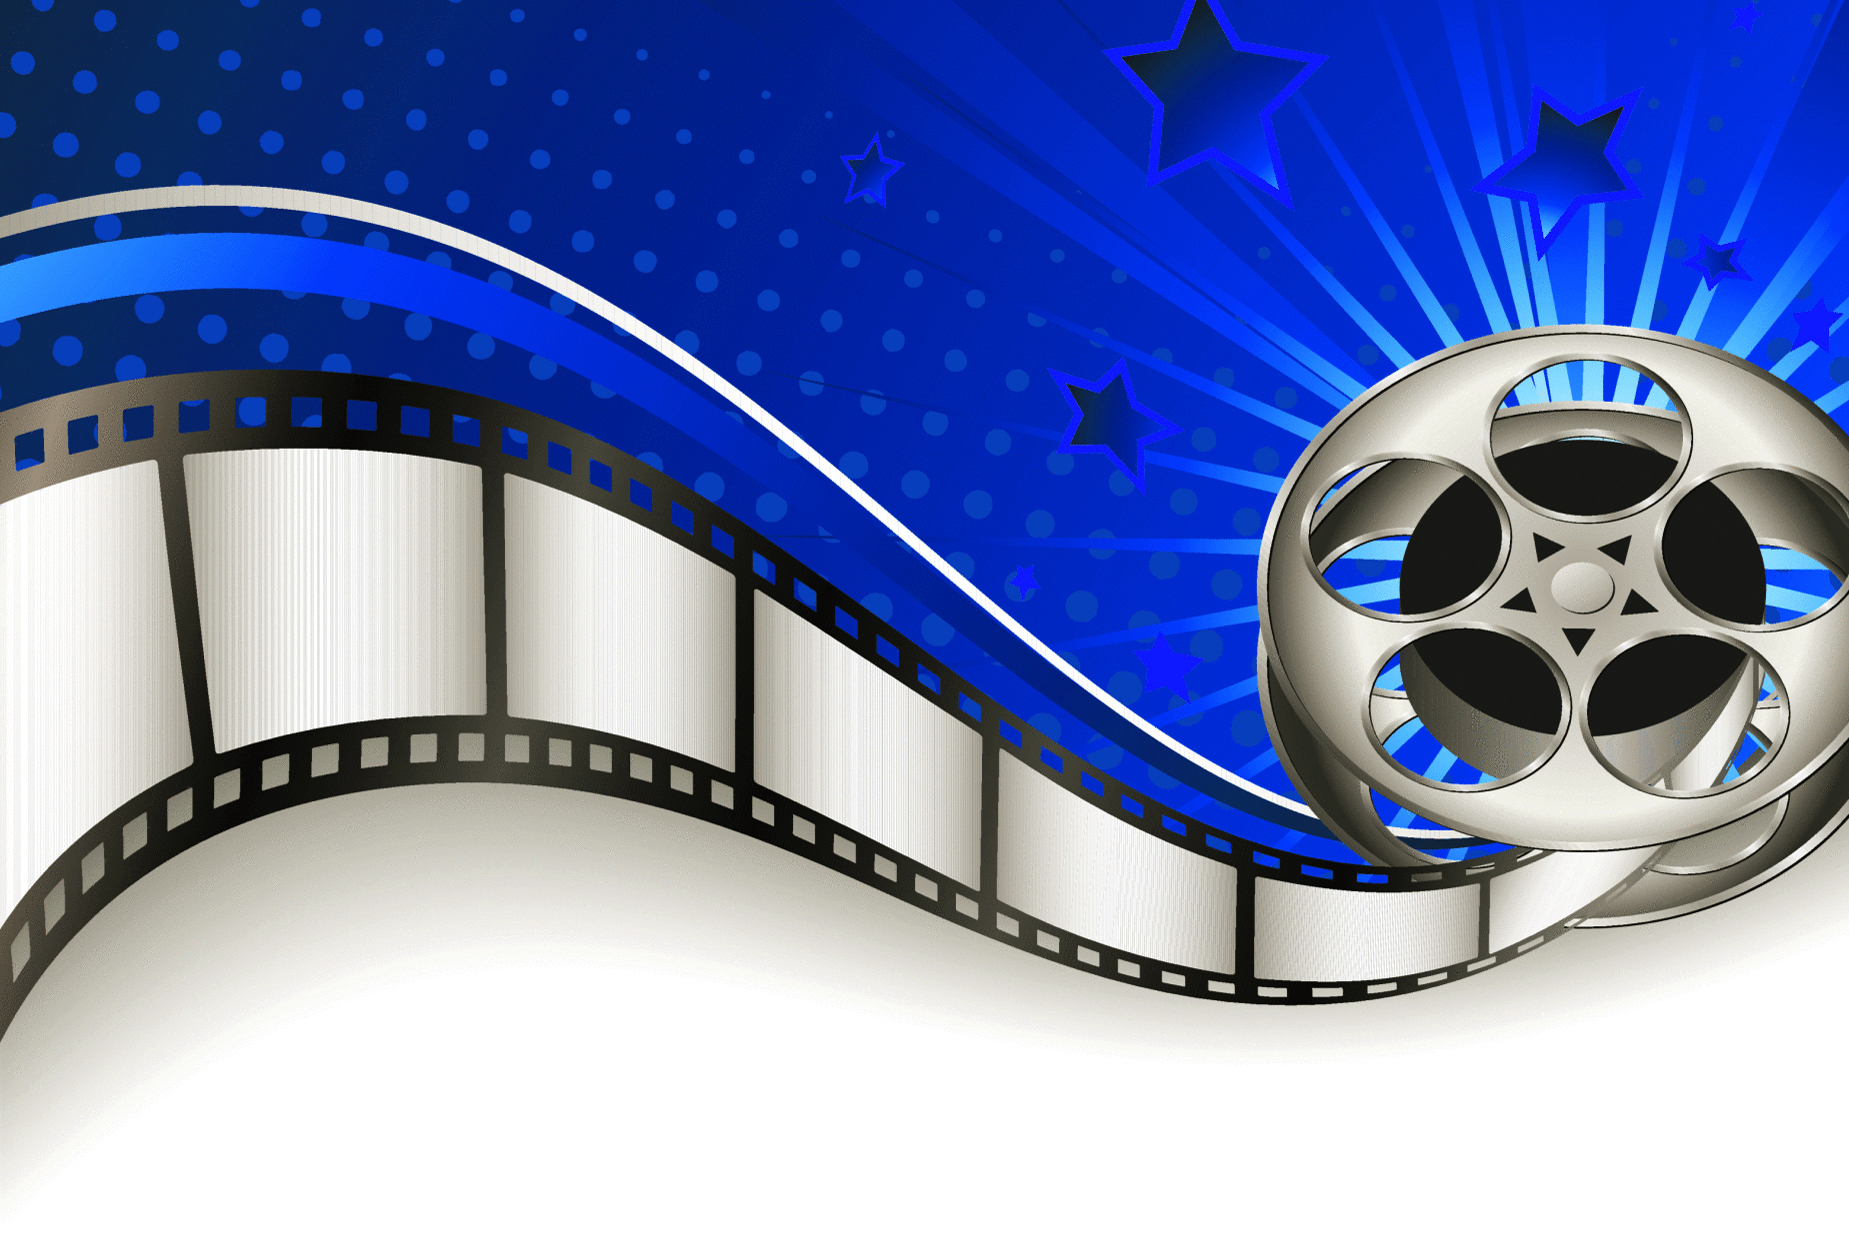 Download Film Production Wallpaper Gallery Movie, Film, Cinema, Drama quotes